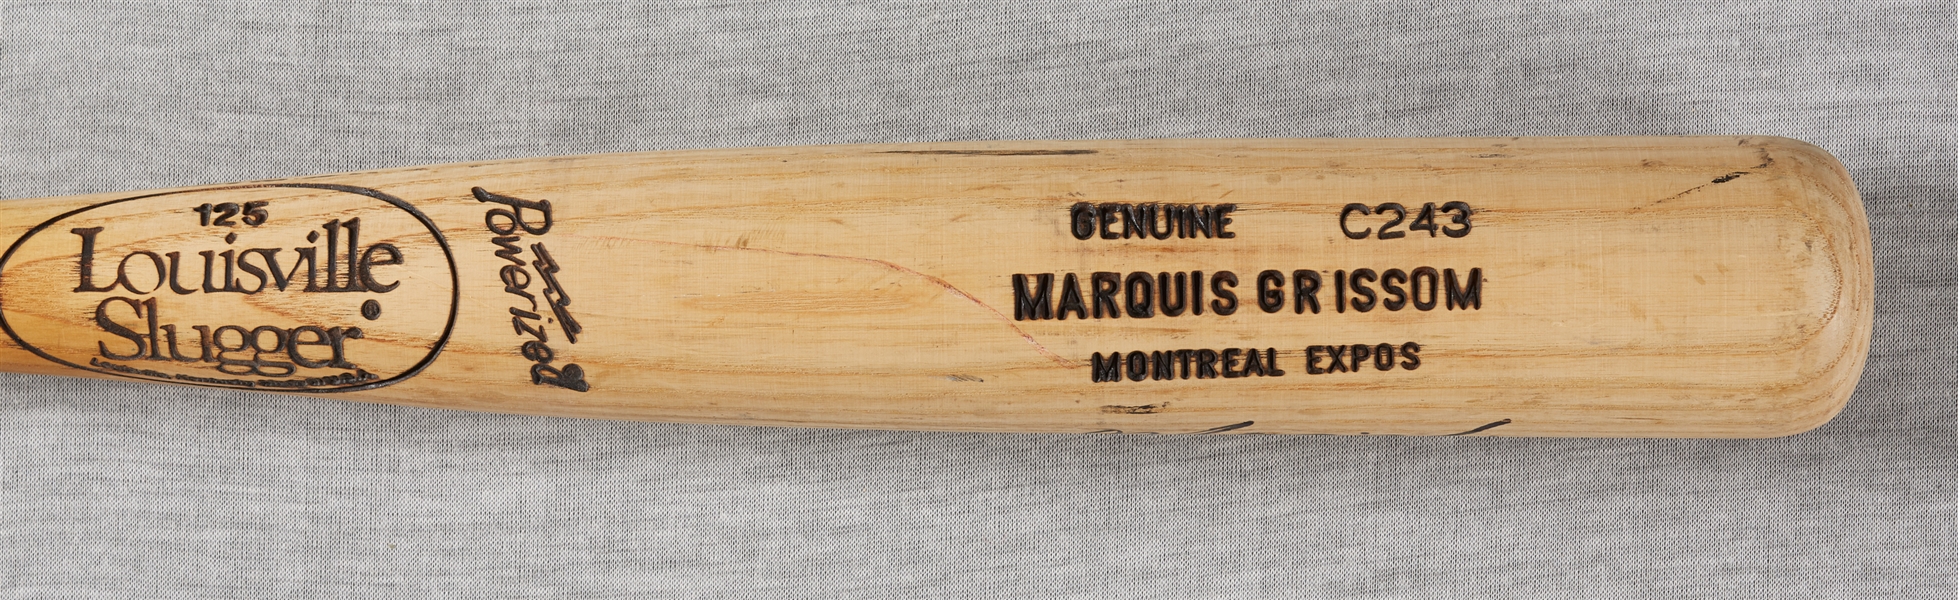 Marquis Grissom Game-Used & Signed Louisville Slugger Bat 